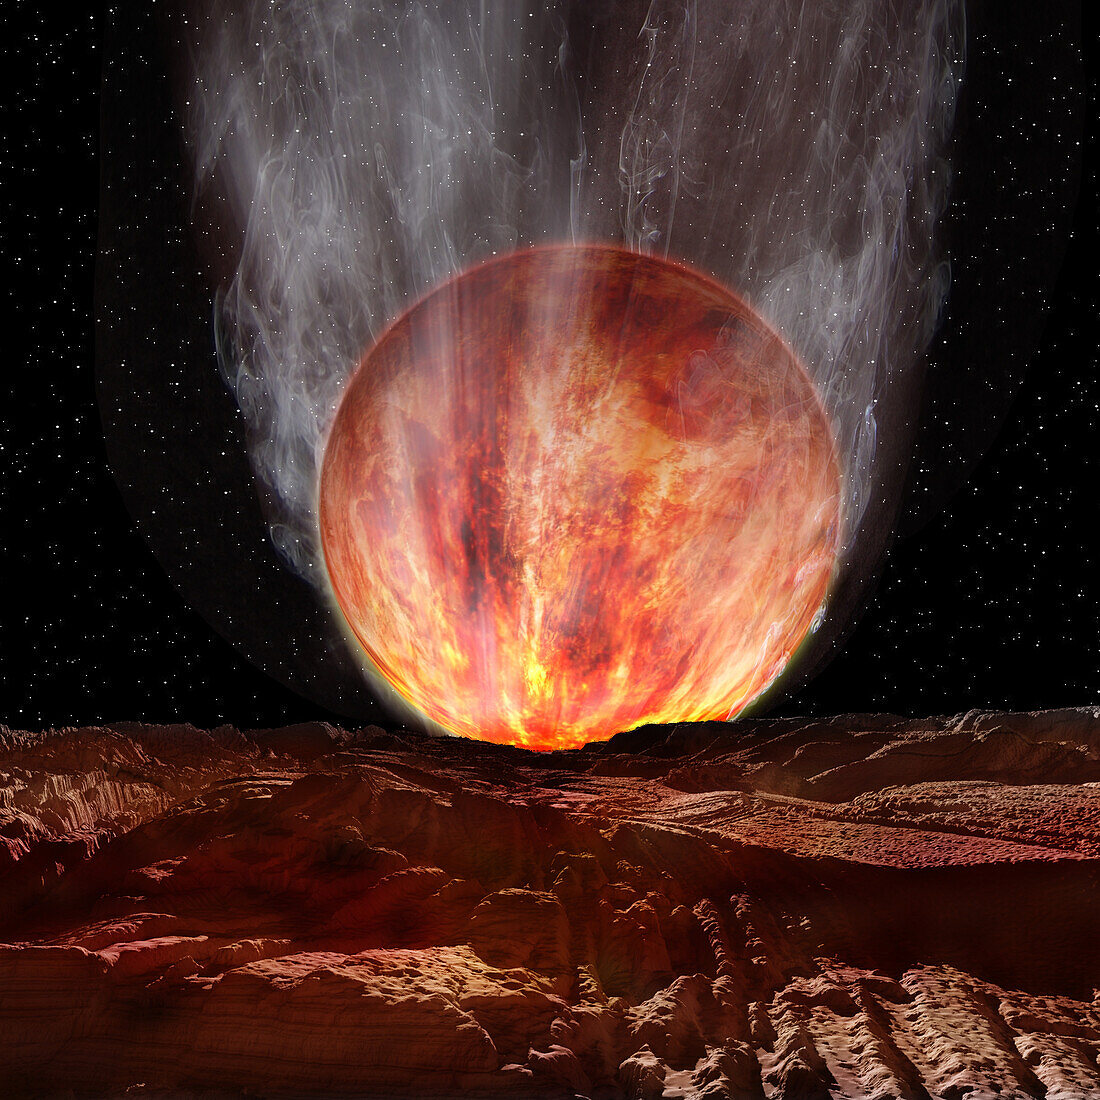 Exoplanet Pi Mensae b, illustration